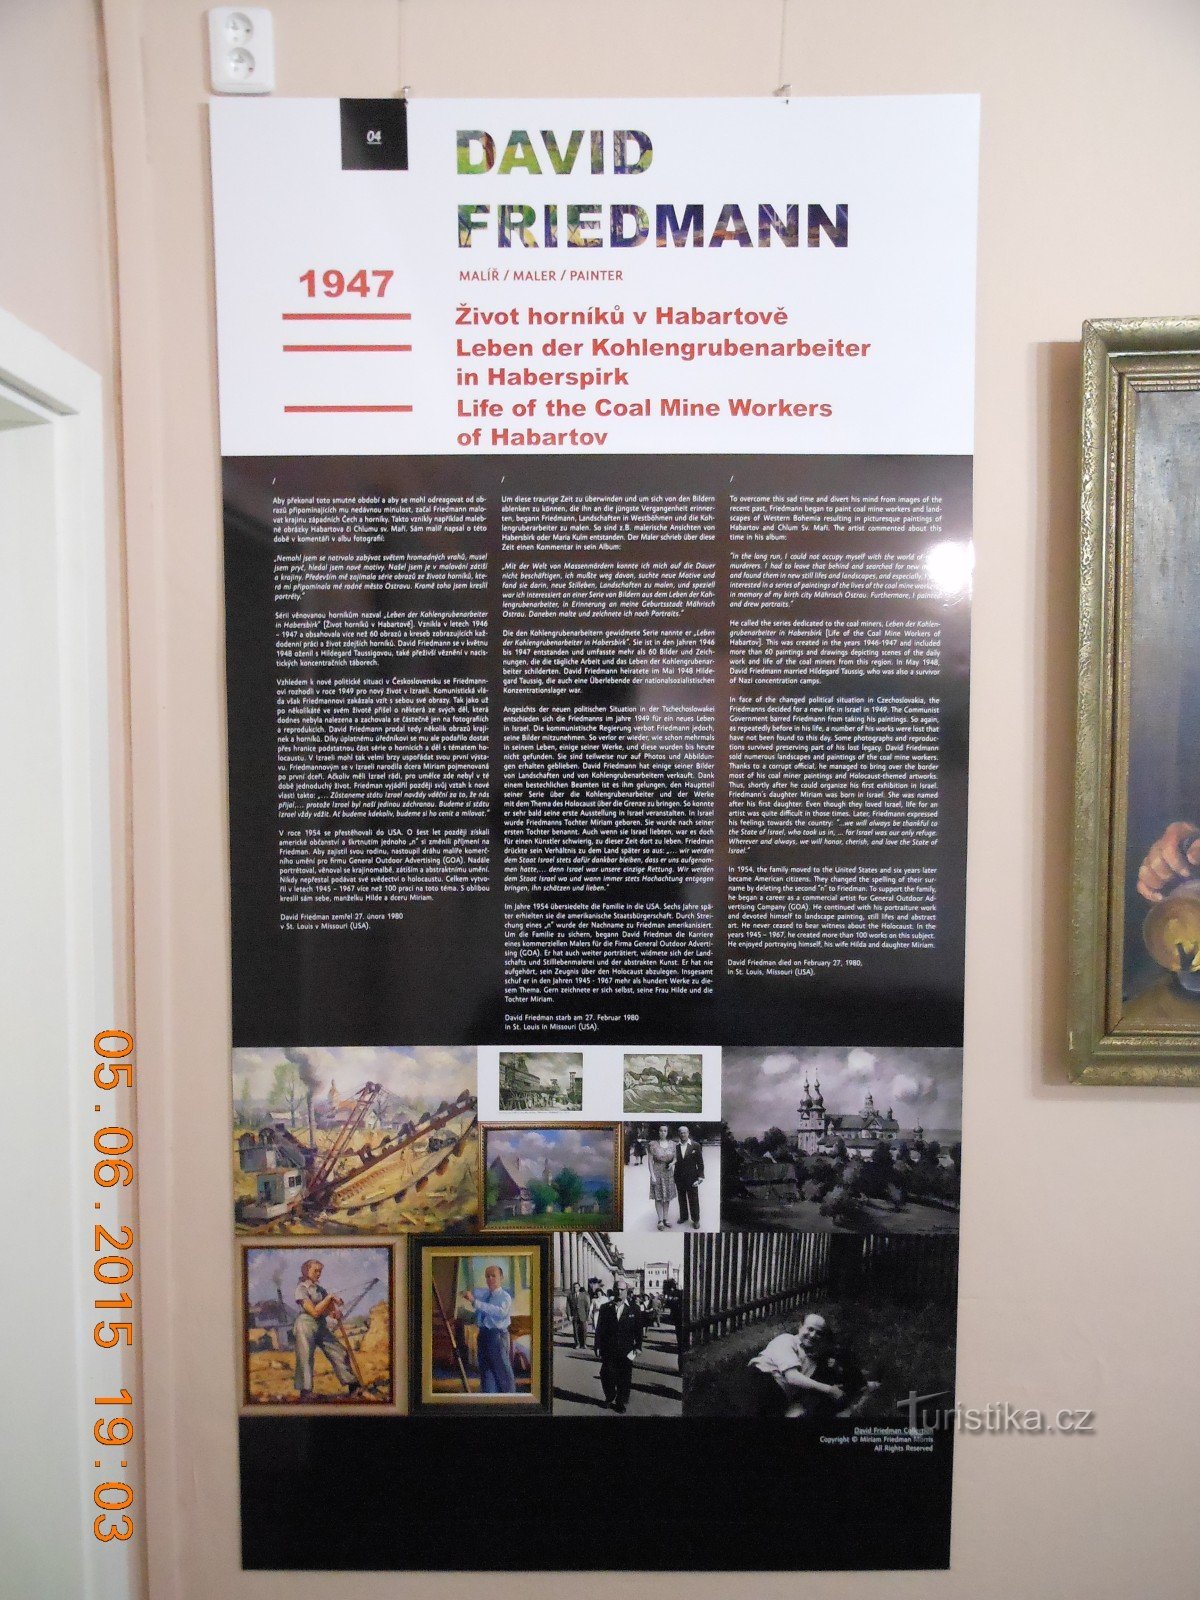 Exhibition DAVID FRIEDMANN - Sokolov Museum